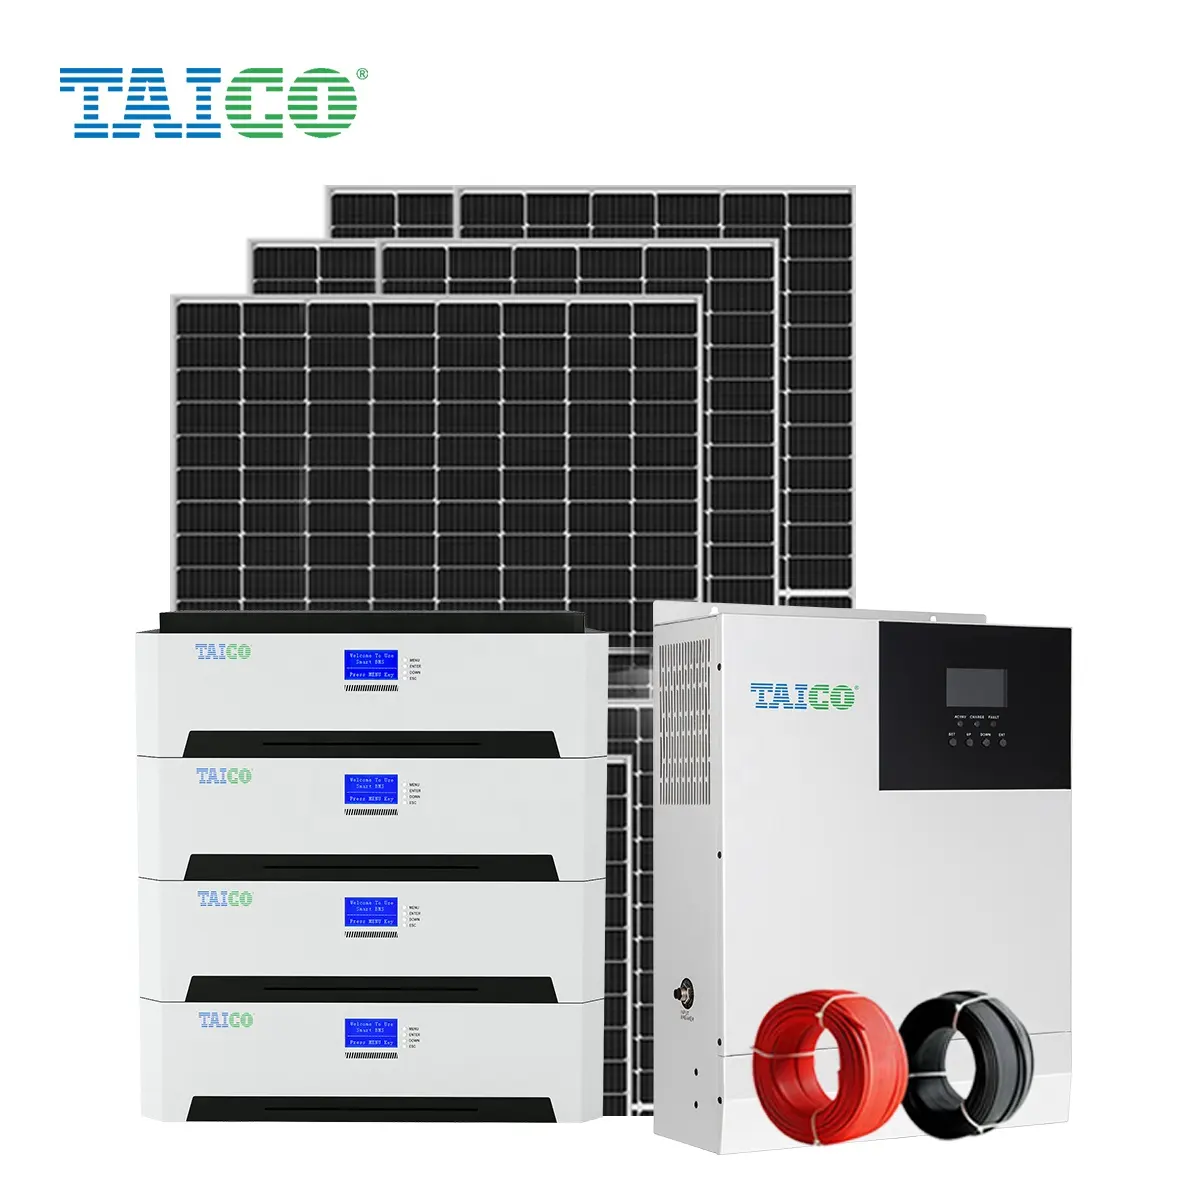 TAICO off grid solar power system solar panel system home 10kw 20kw 30kw 50kw solar panel 20000w solar energy systems